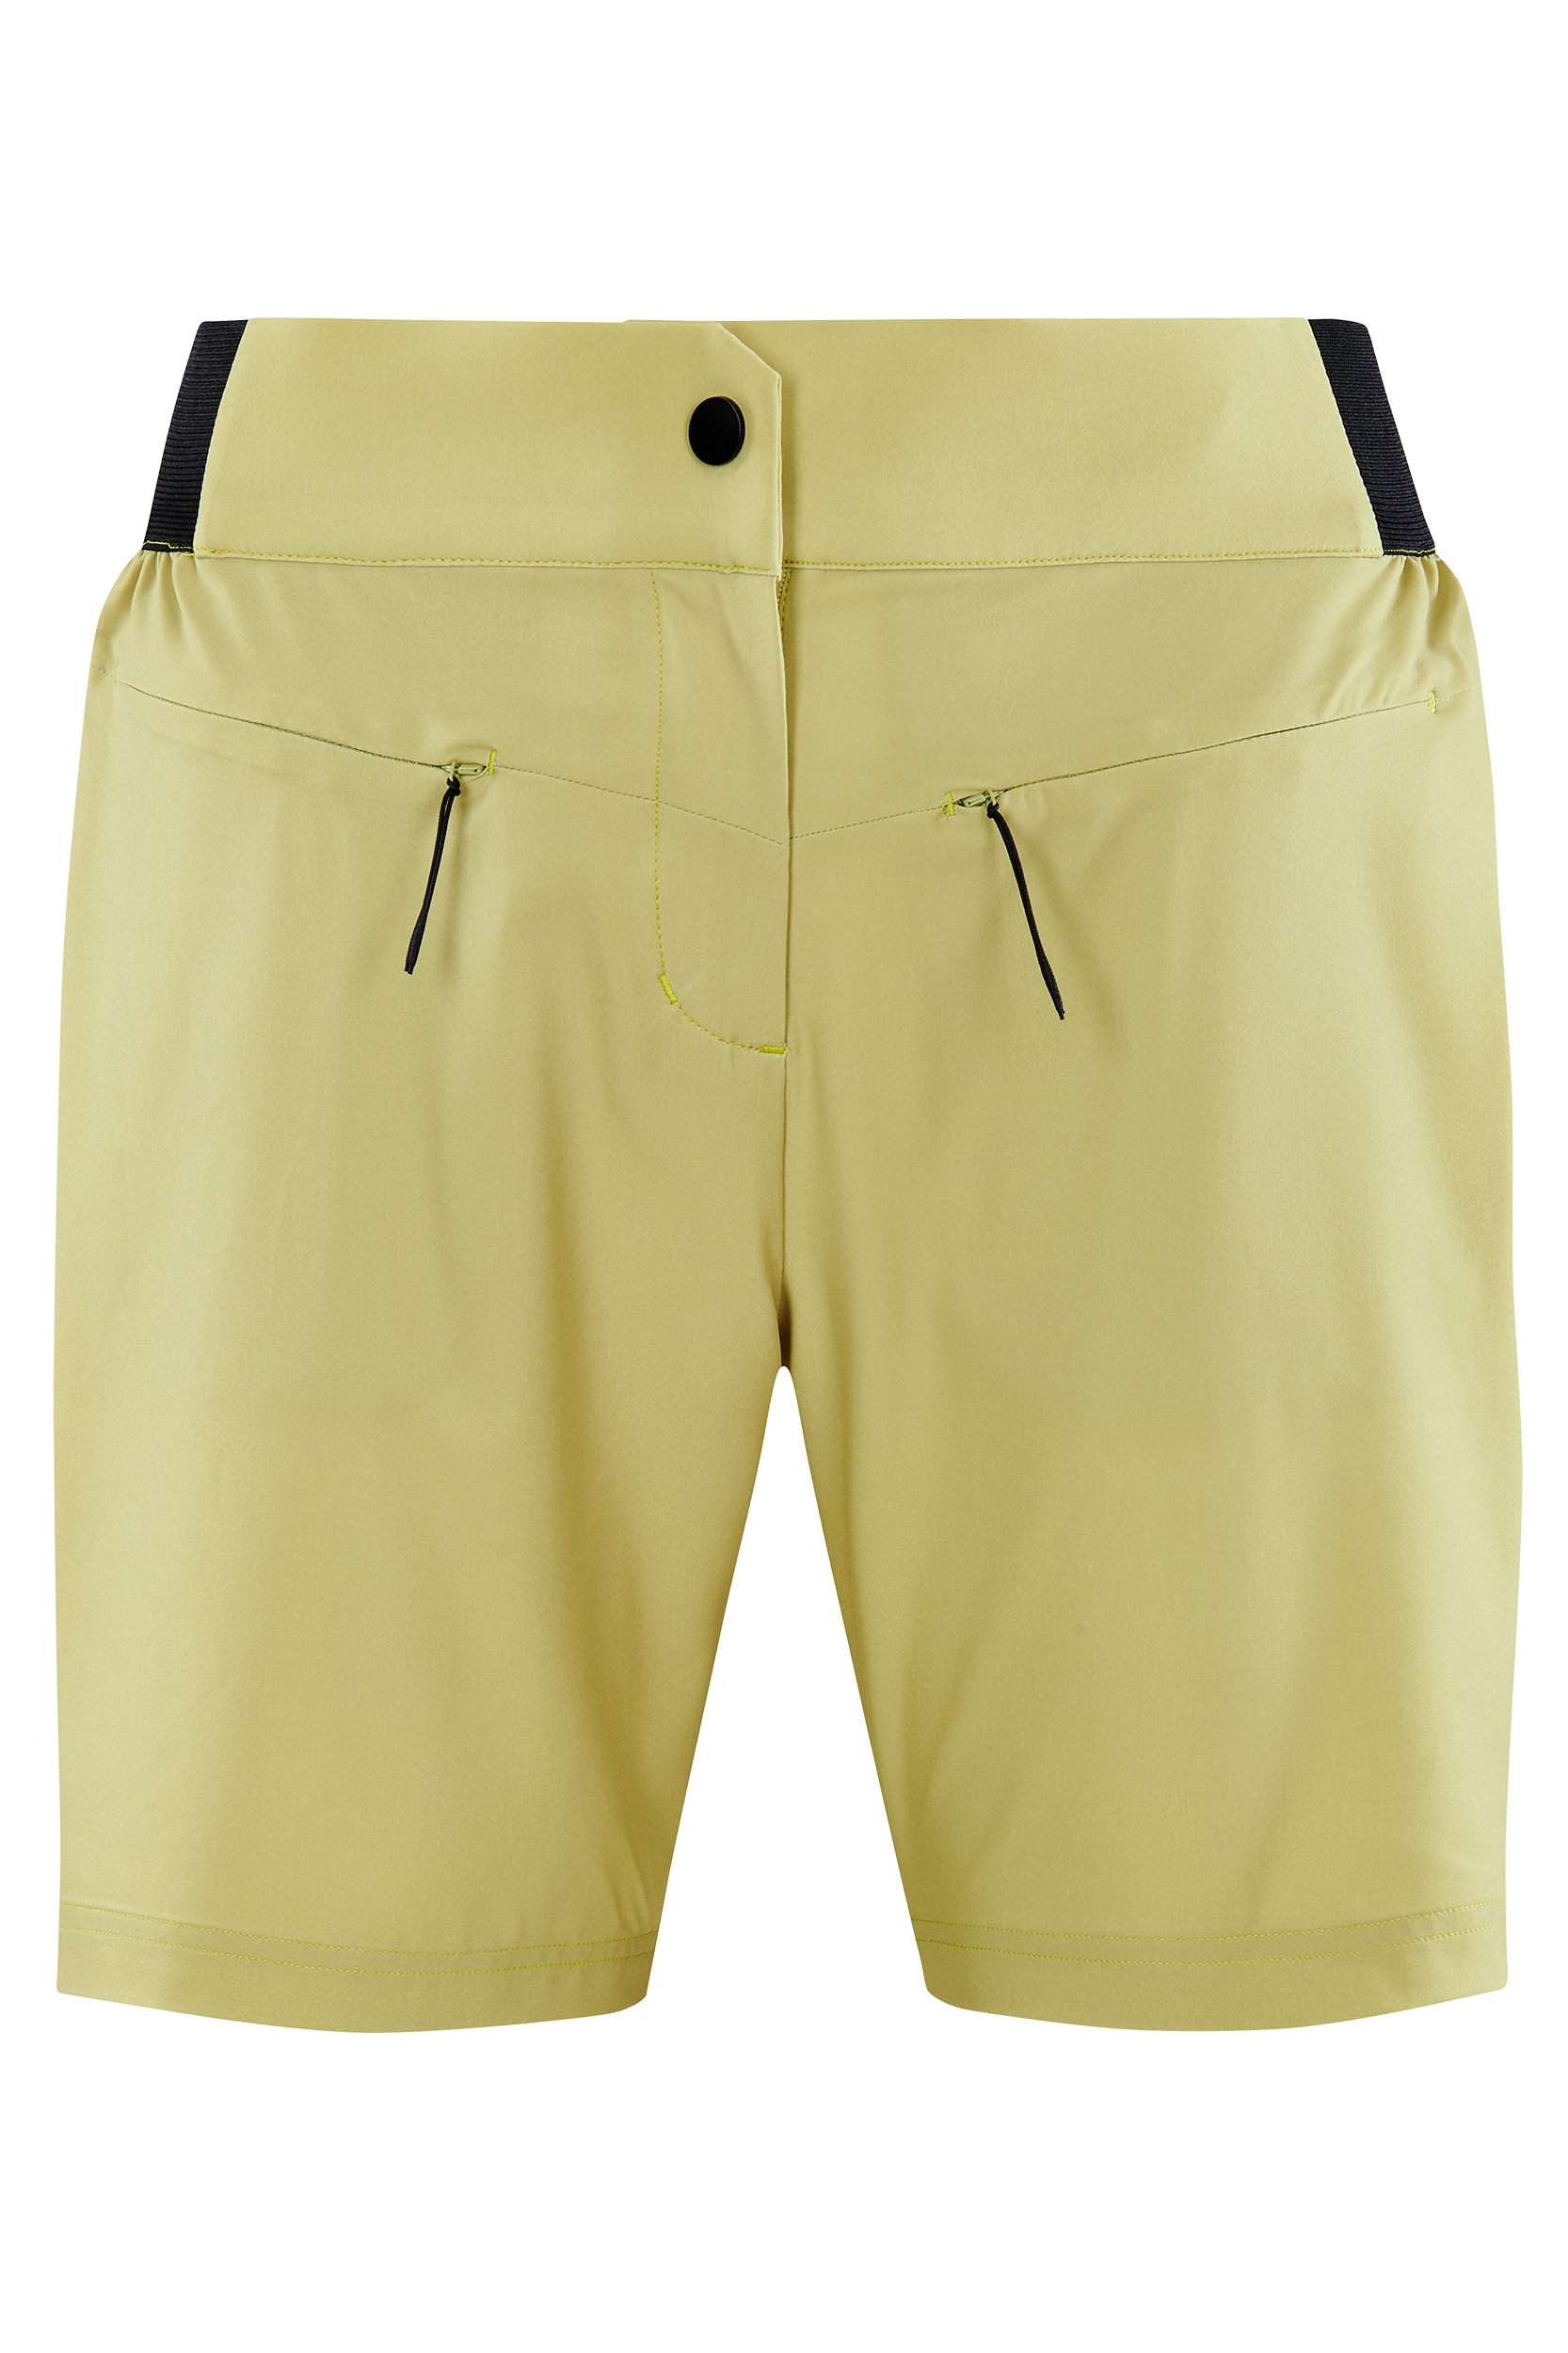 CUBE ATX WS Baggy Shorts CMPT incl. Liner Shorts